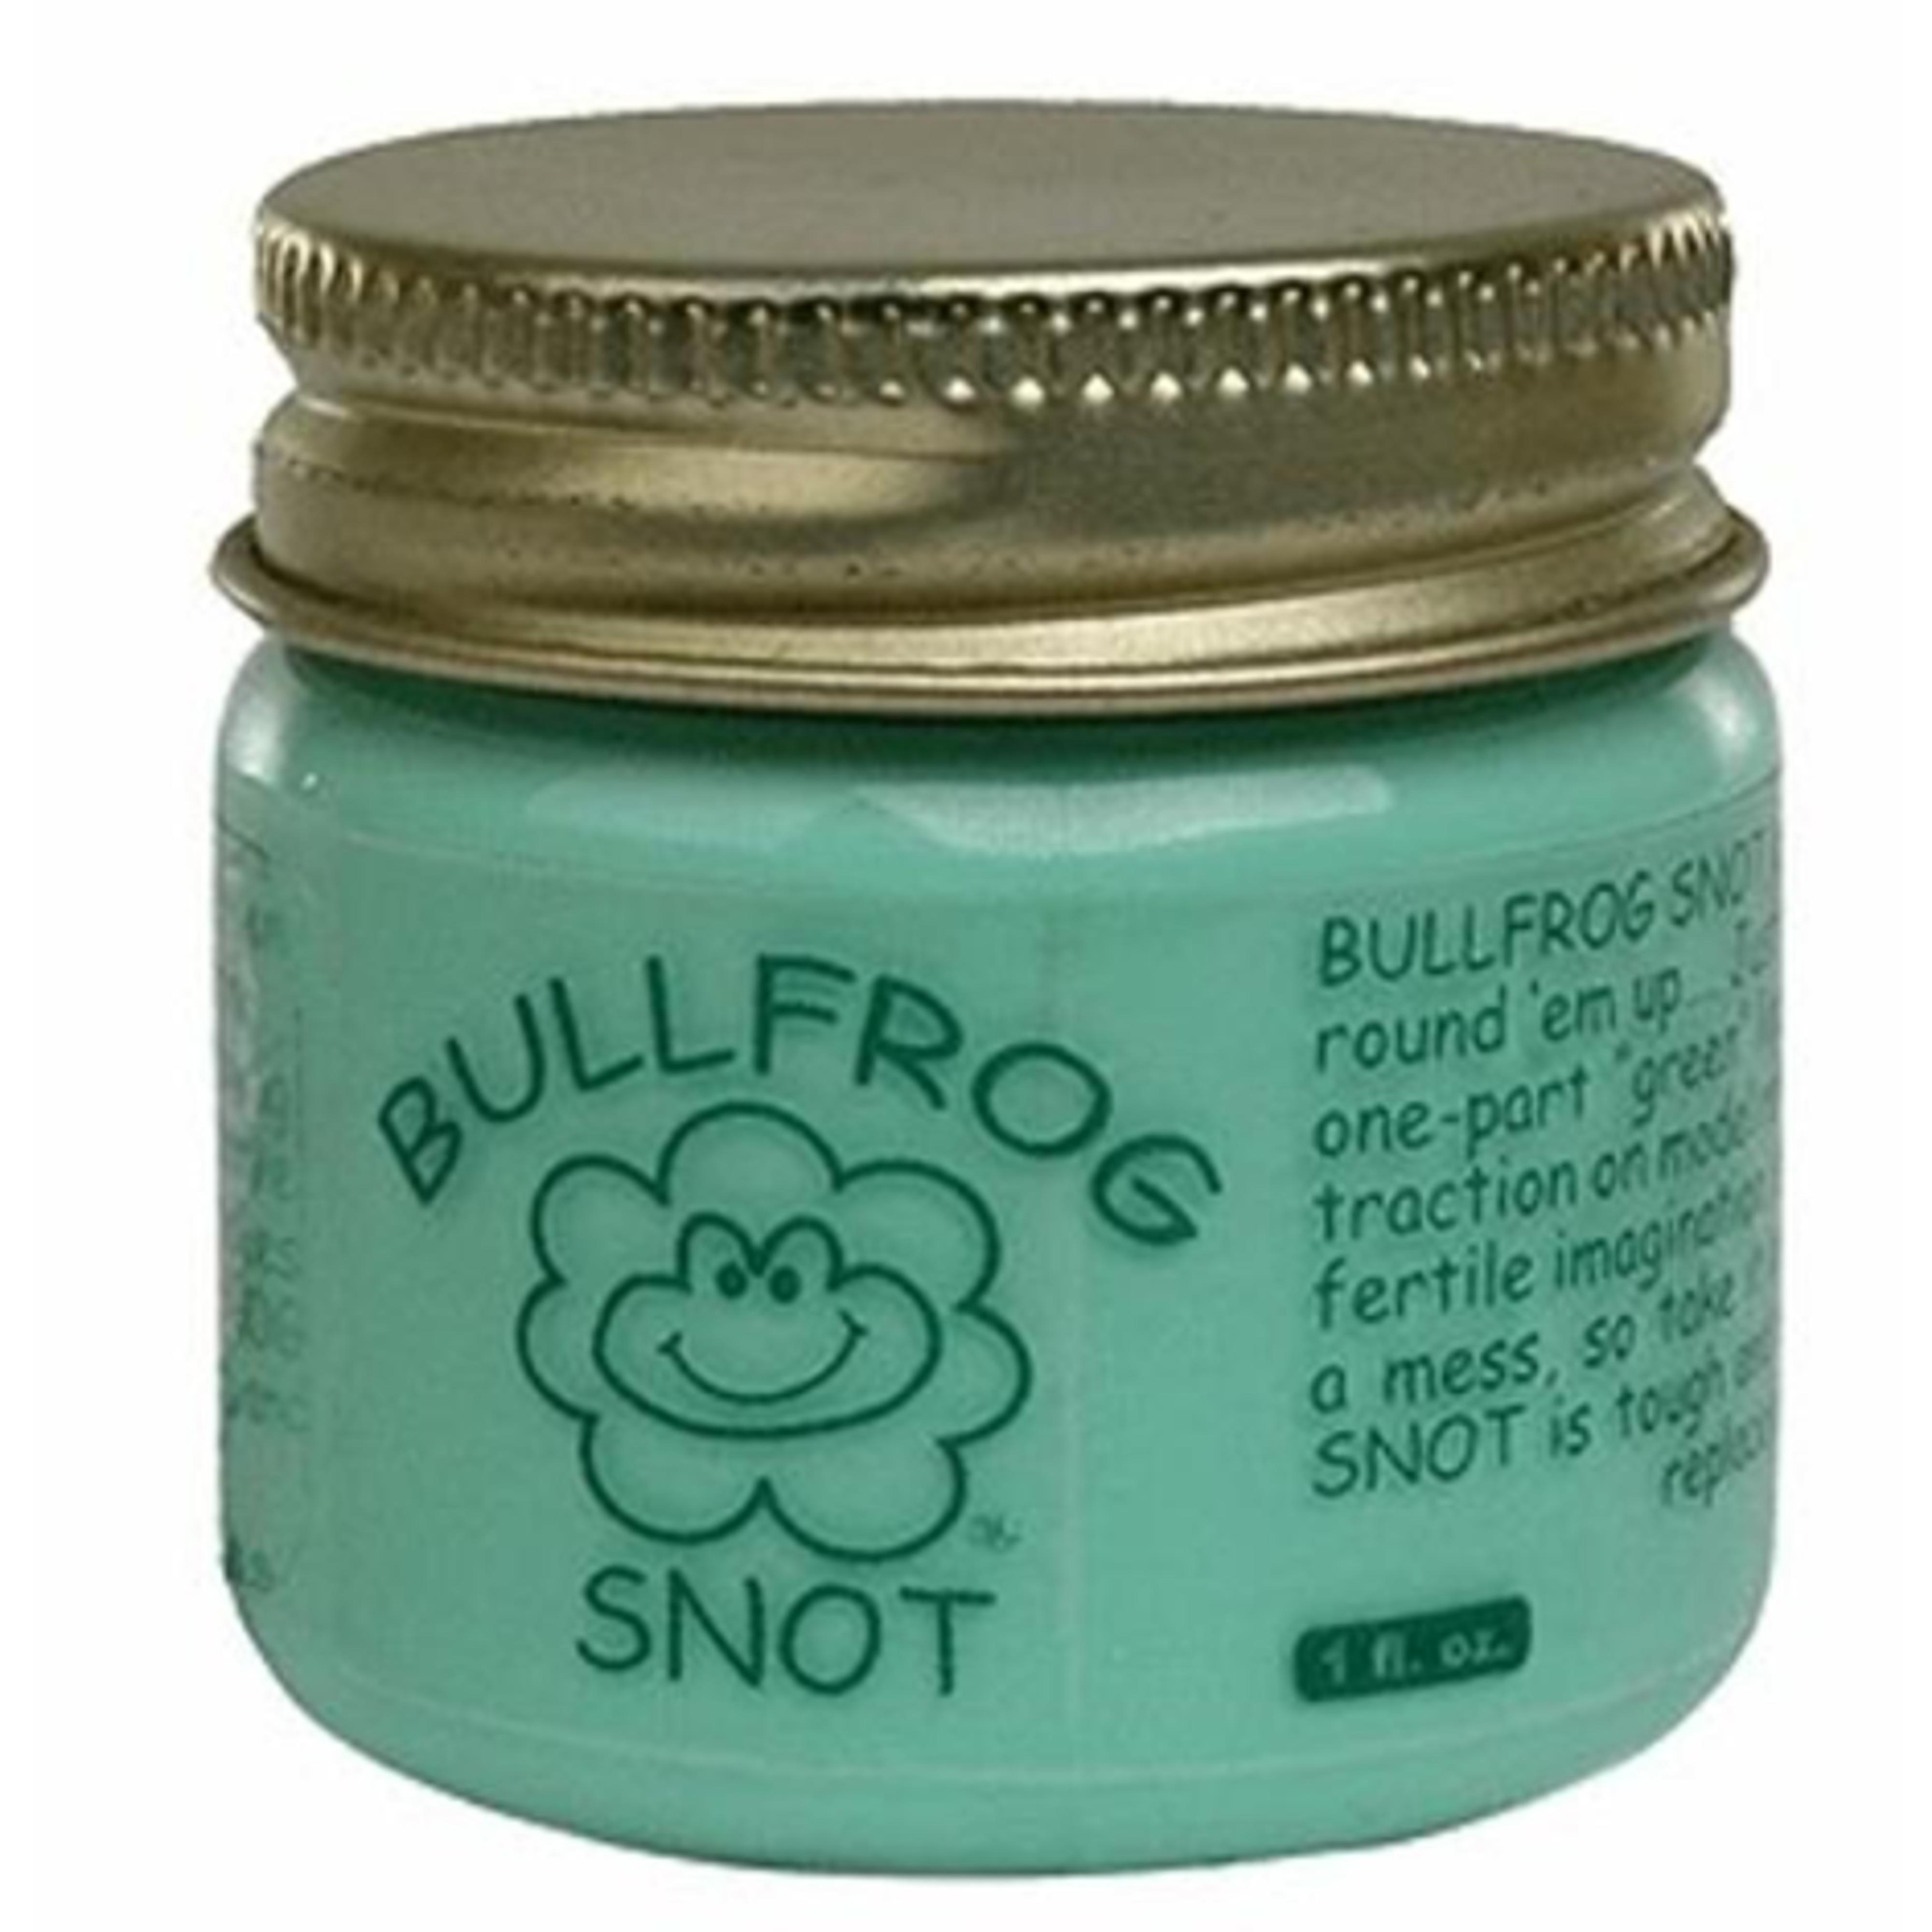 Bullfrog Snot 1 oz,